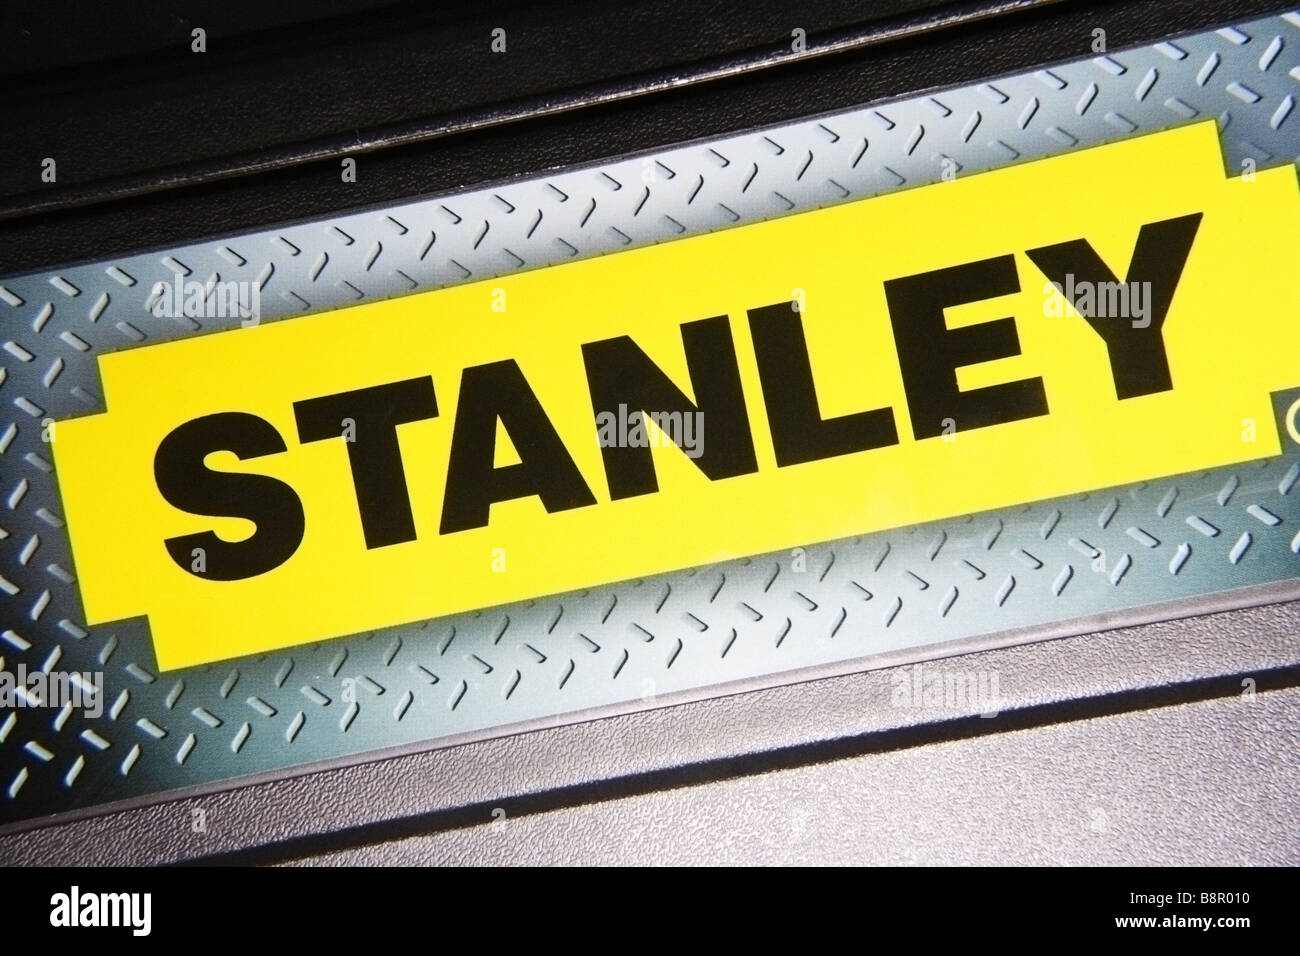 Stanley tools marque logo Banque D'Images